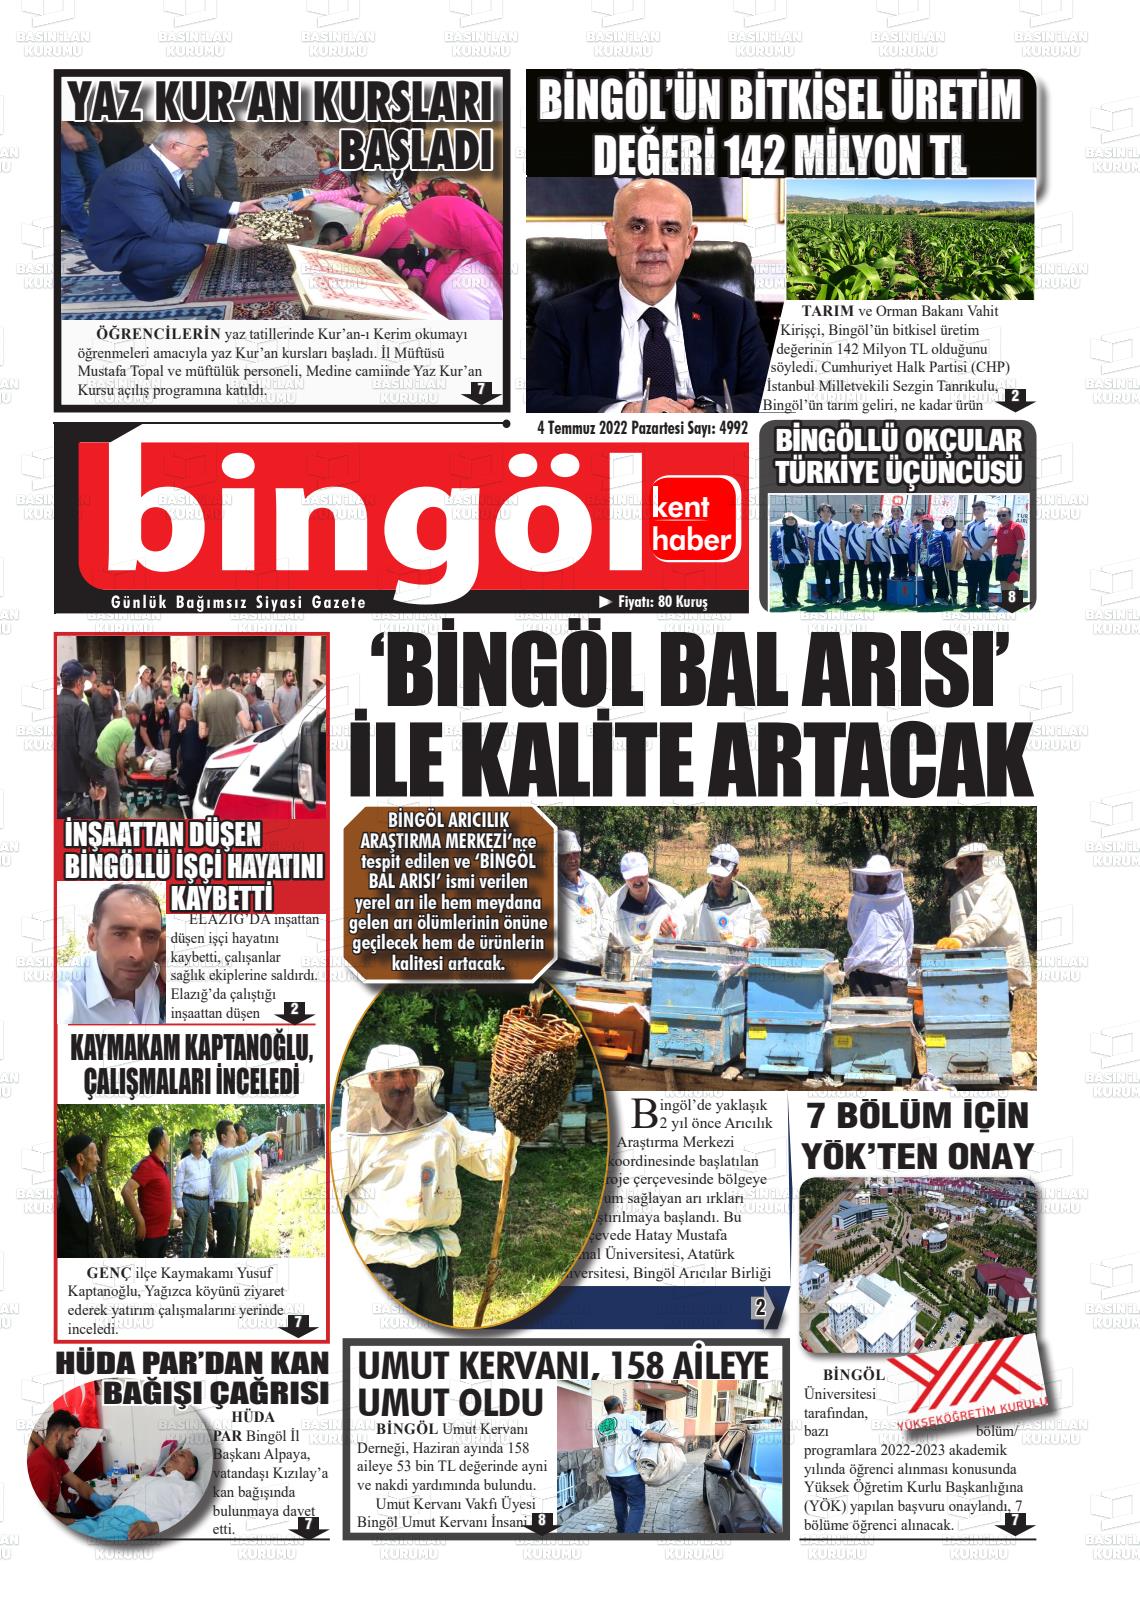 04 Temmuz 2022 Bingöl Kent Haber Gazete Manşeti